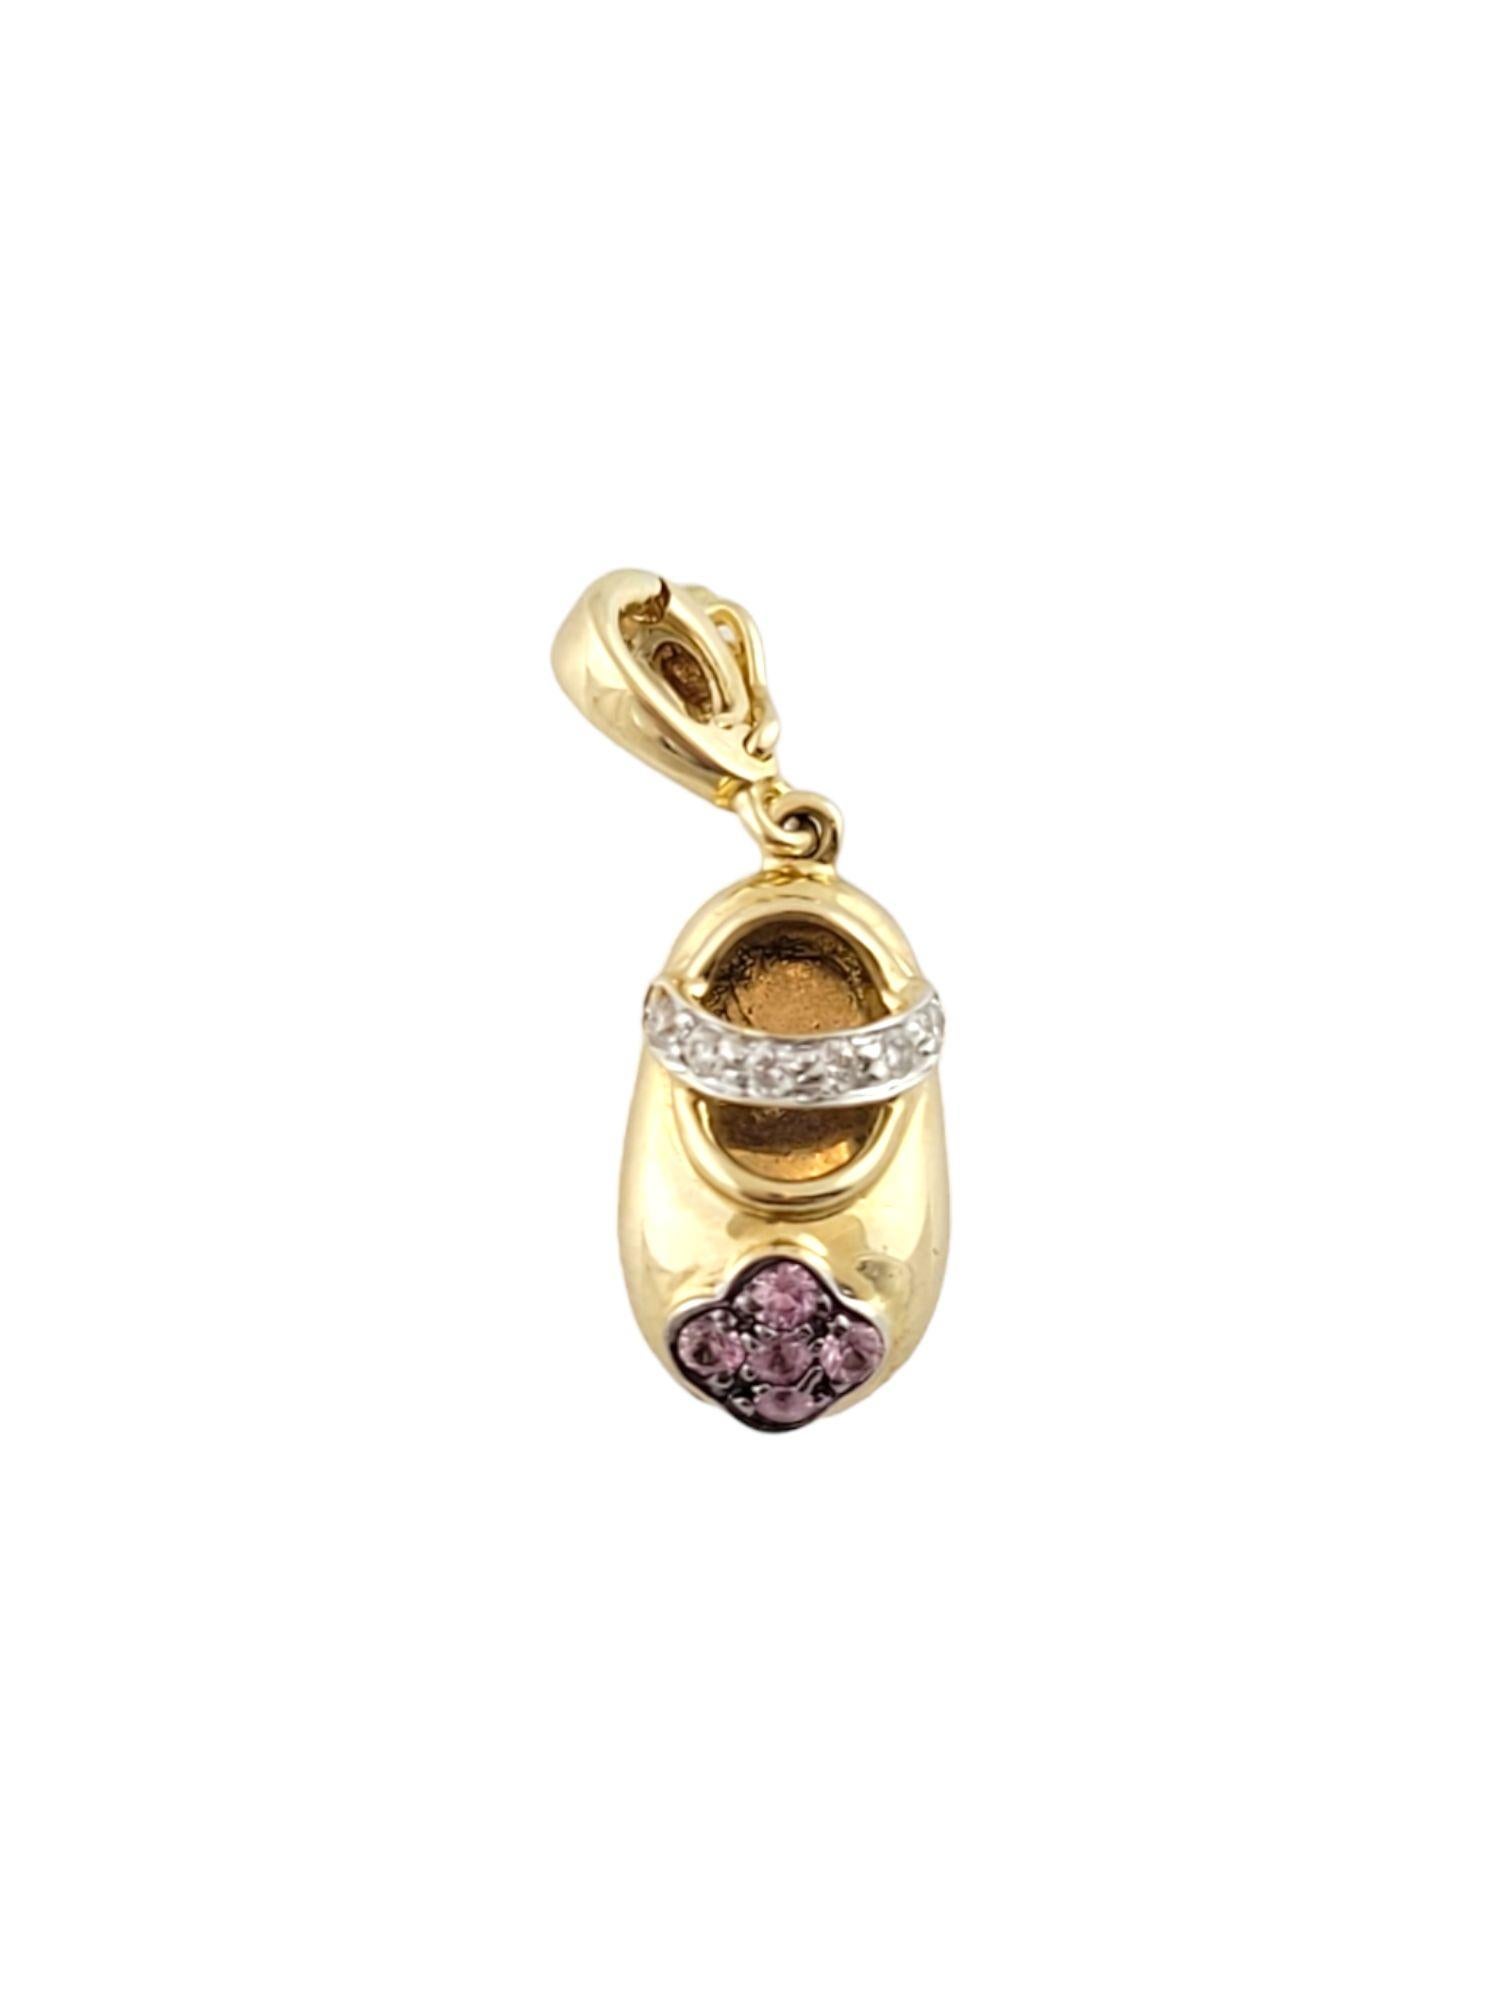 Women's 14k Yellow Gold Shoe Charm with Diamonds & Purple Stones For Sale